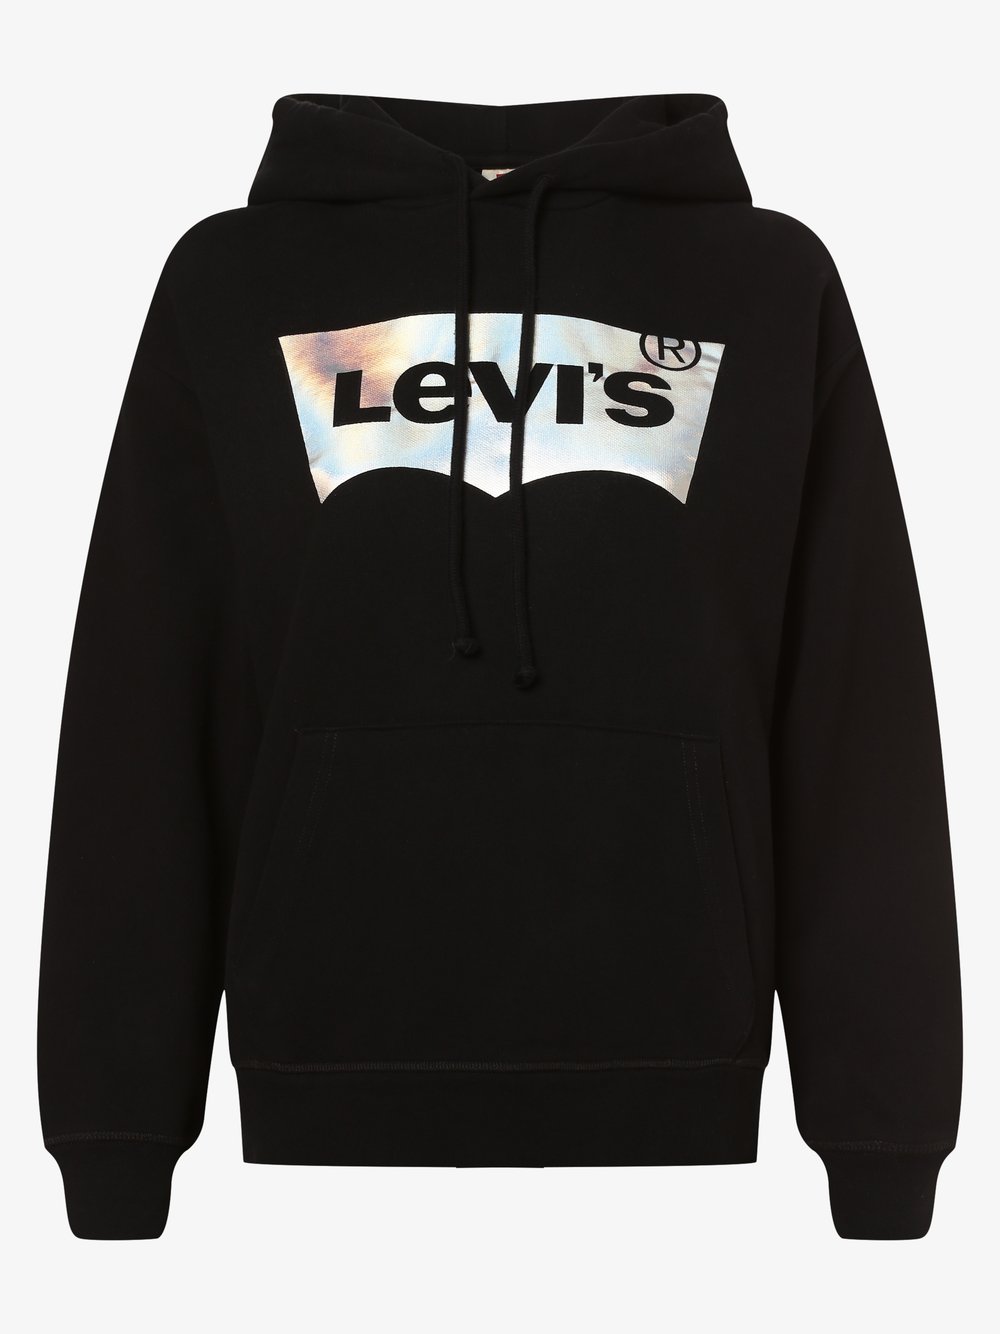 Levi's - Damska bluza z kapturem, czarny Levi's